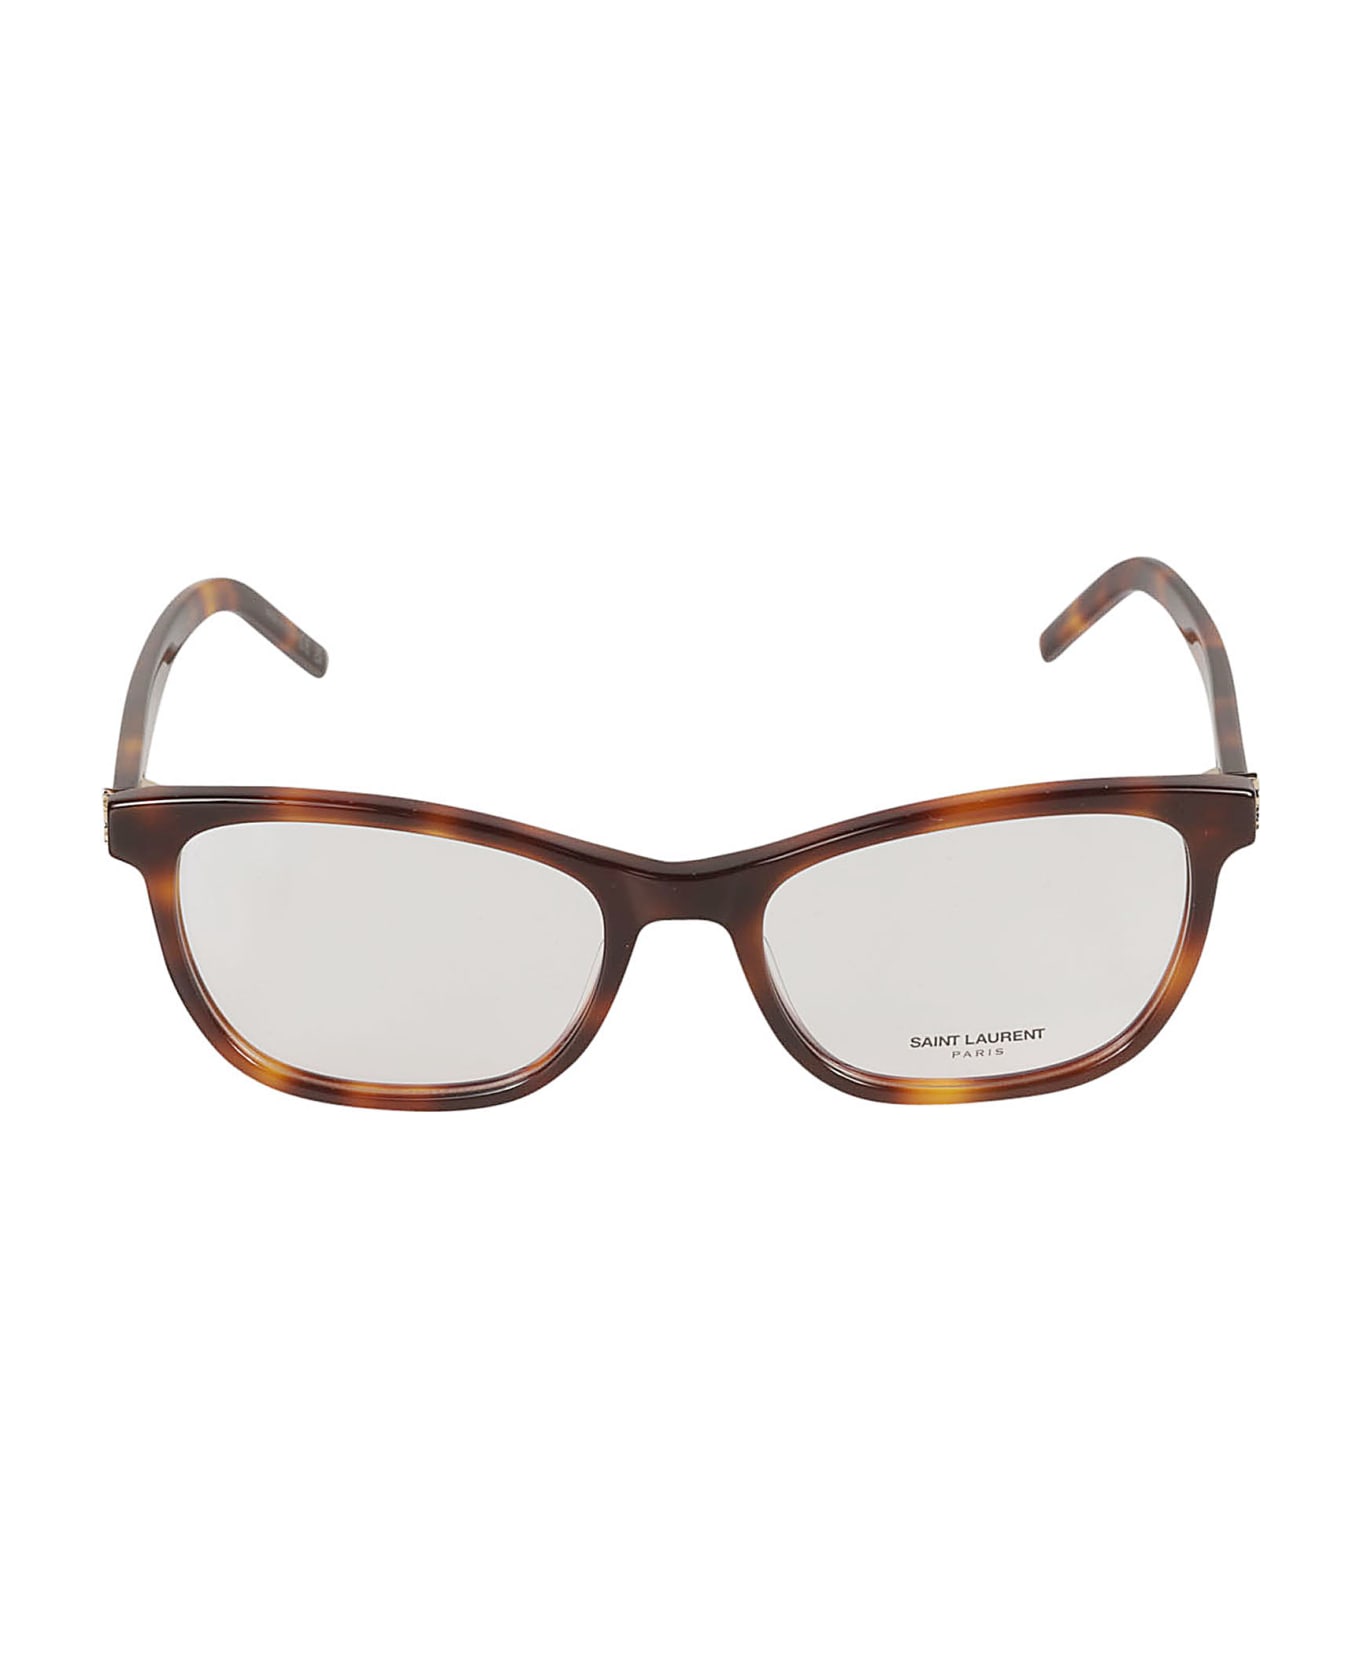 Saint Laurent Eyewear Ysl Hinge Oval Frame Glasses - Havana/Transparent